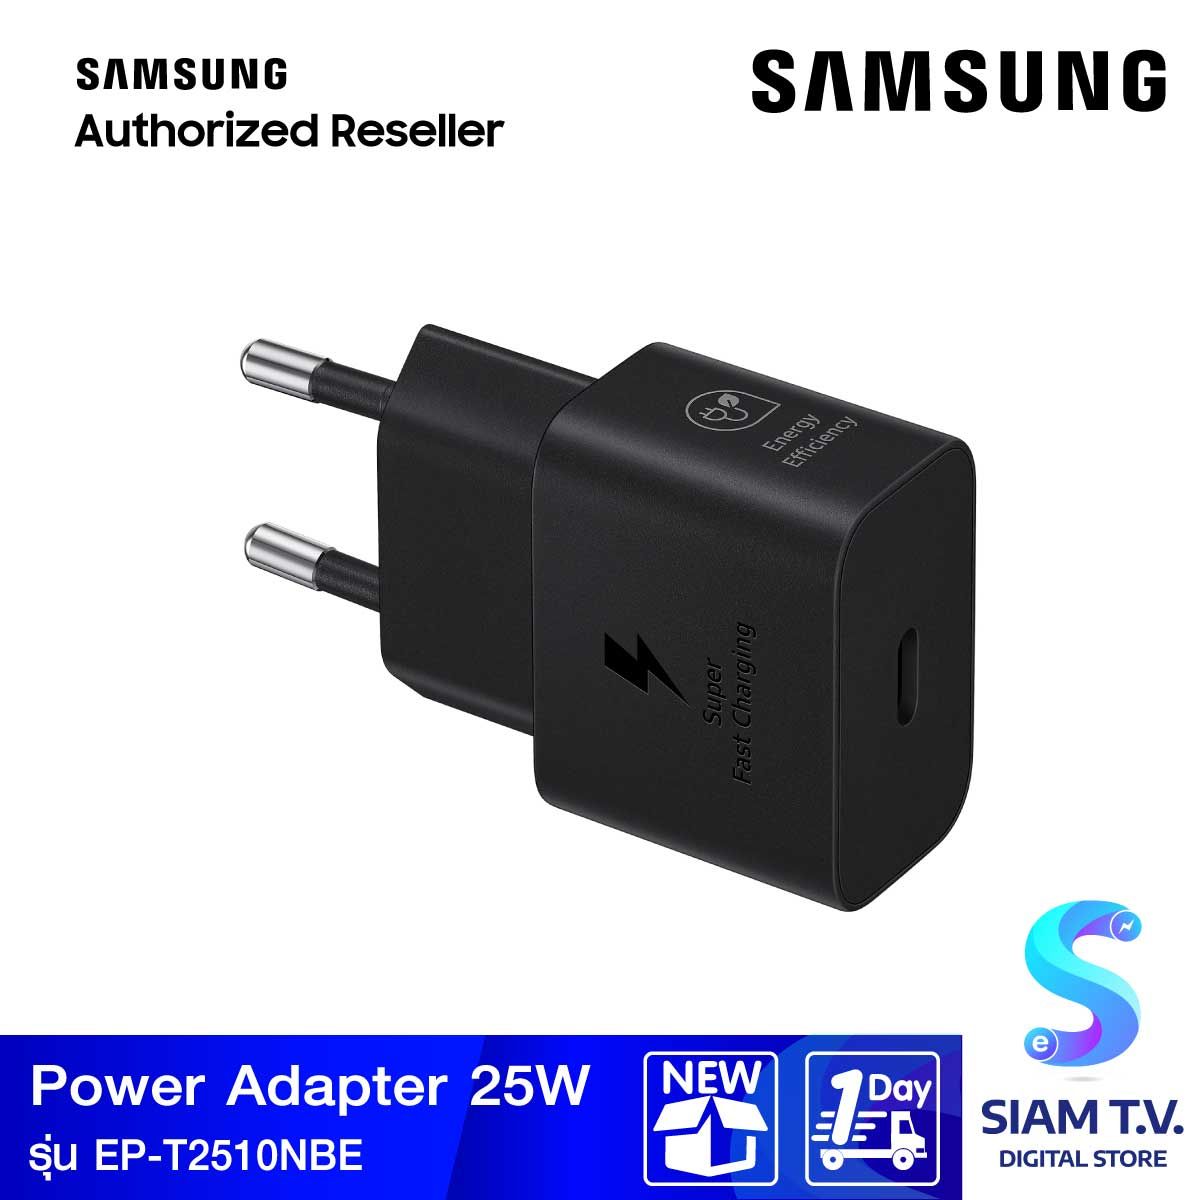 SAMSUNG Power Adapter 25W